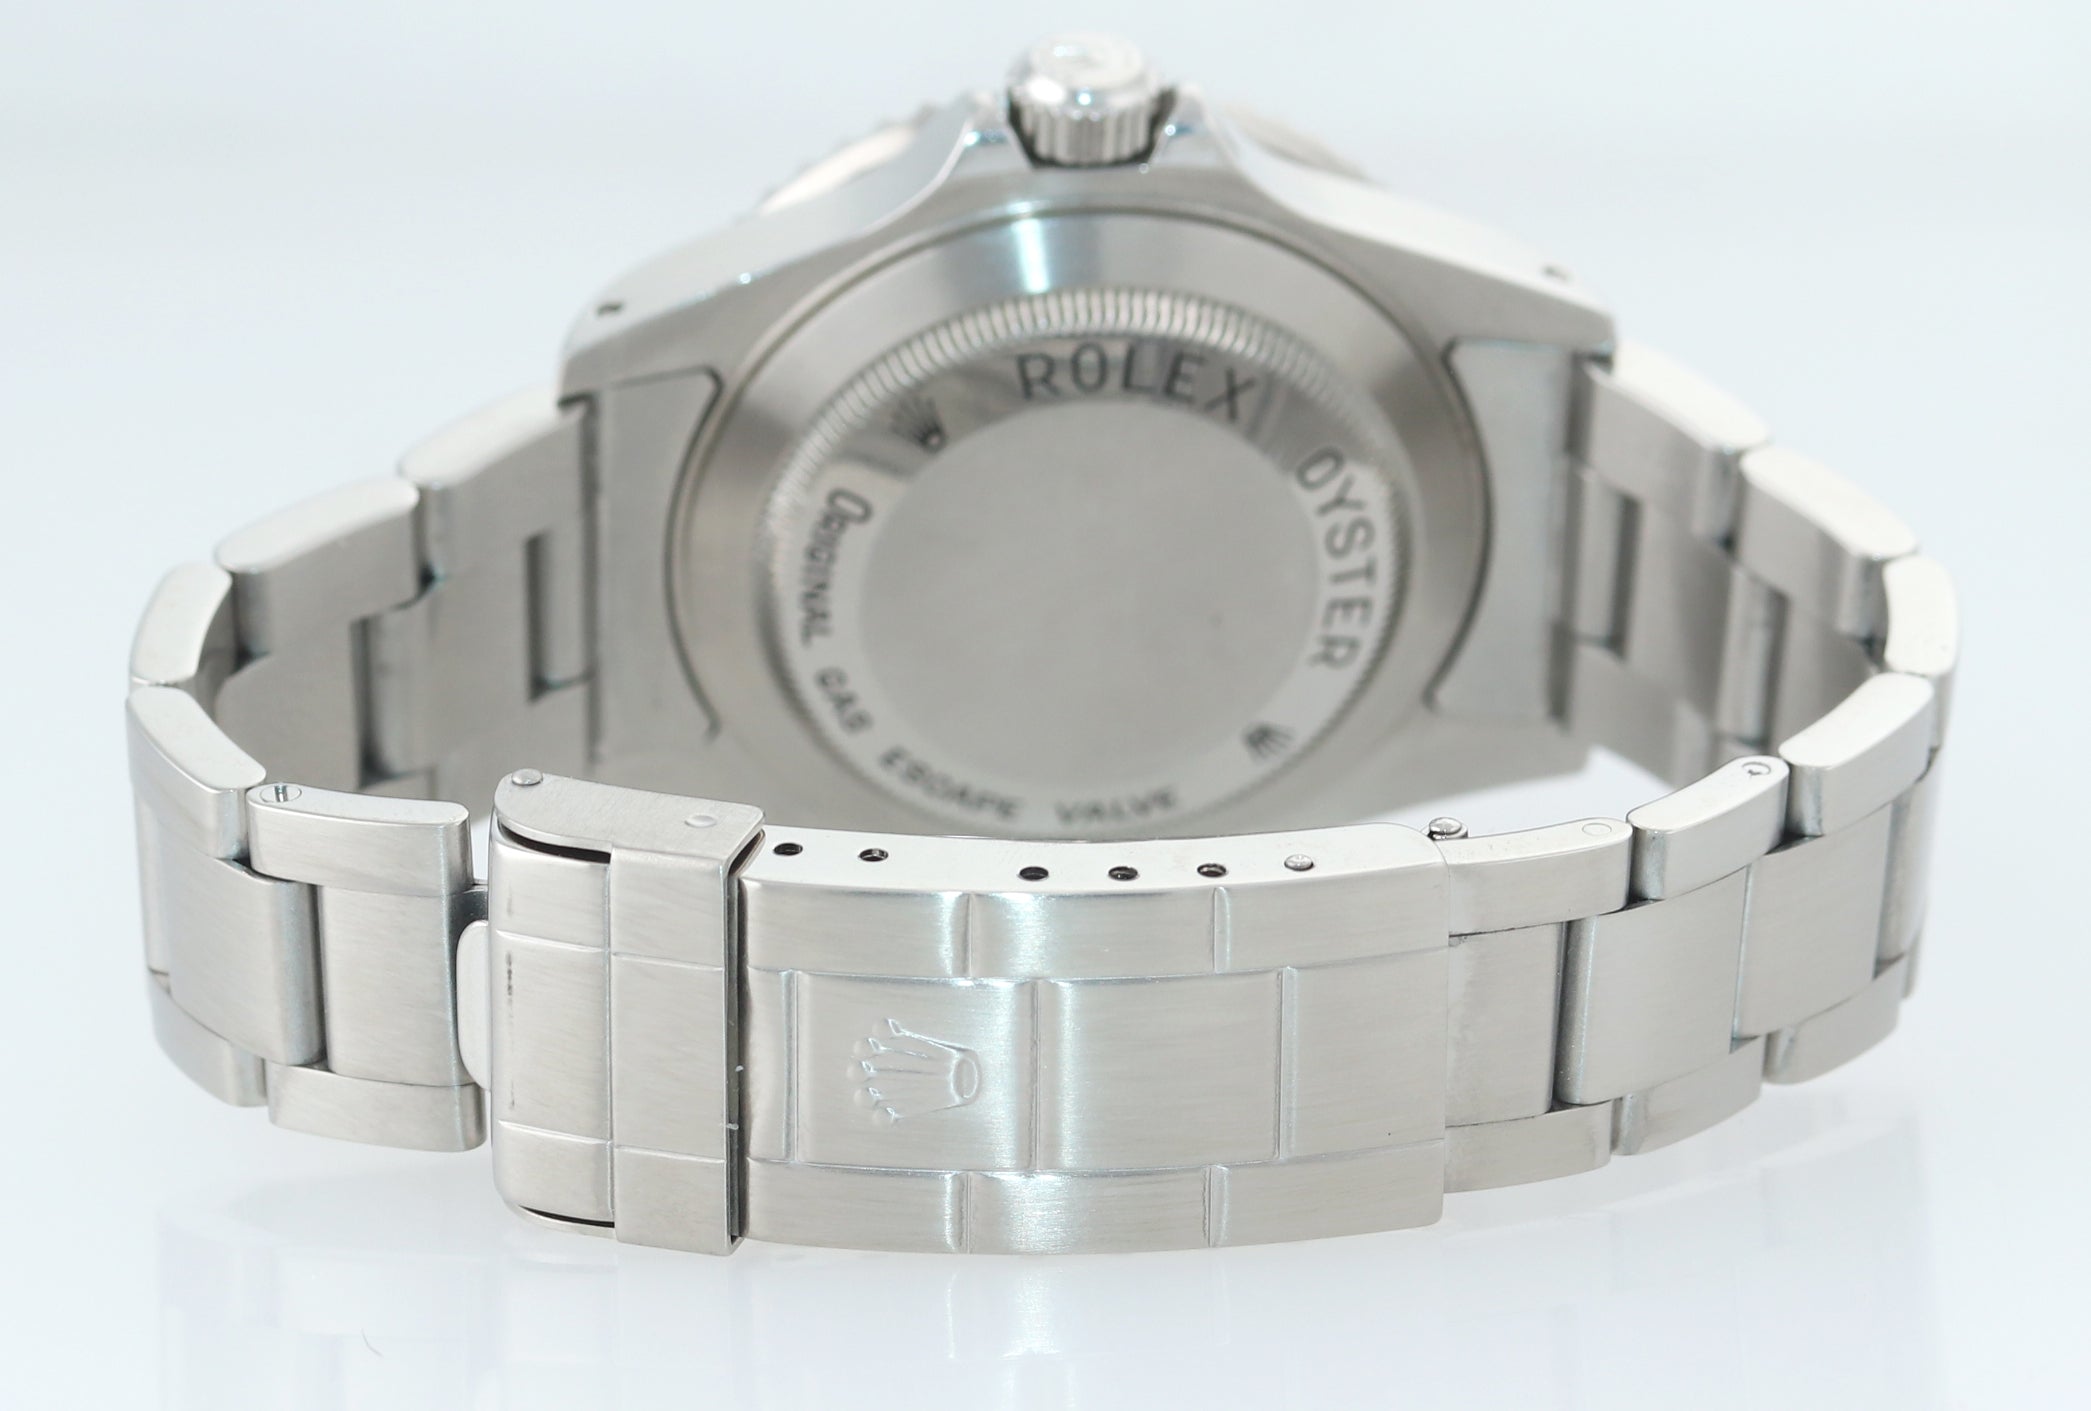 MINT Rolex Sea-Dweller Steel Date 16600 40mm Date Black Diver Watch Box